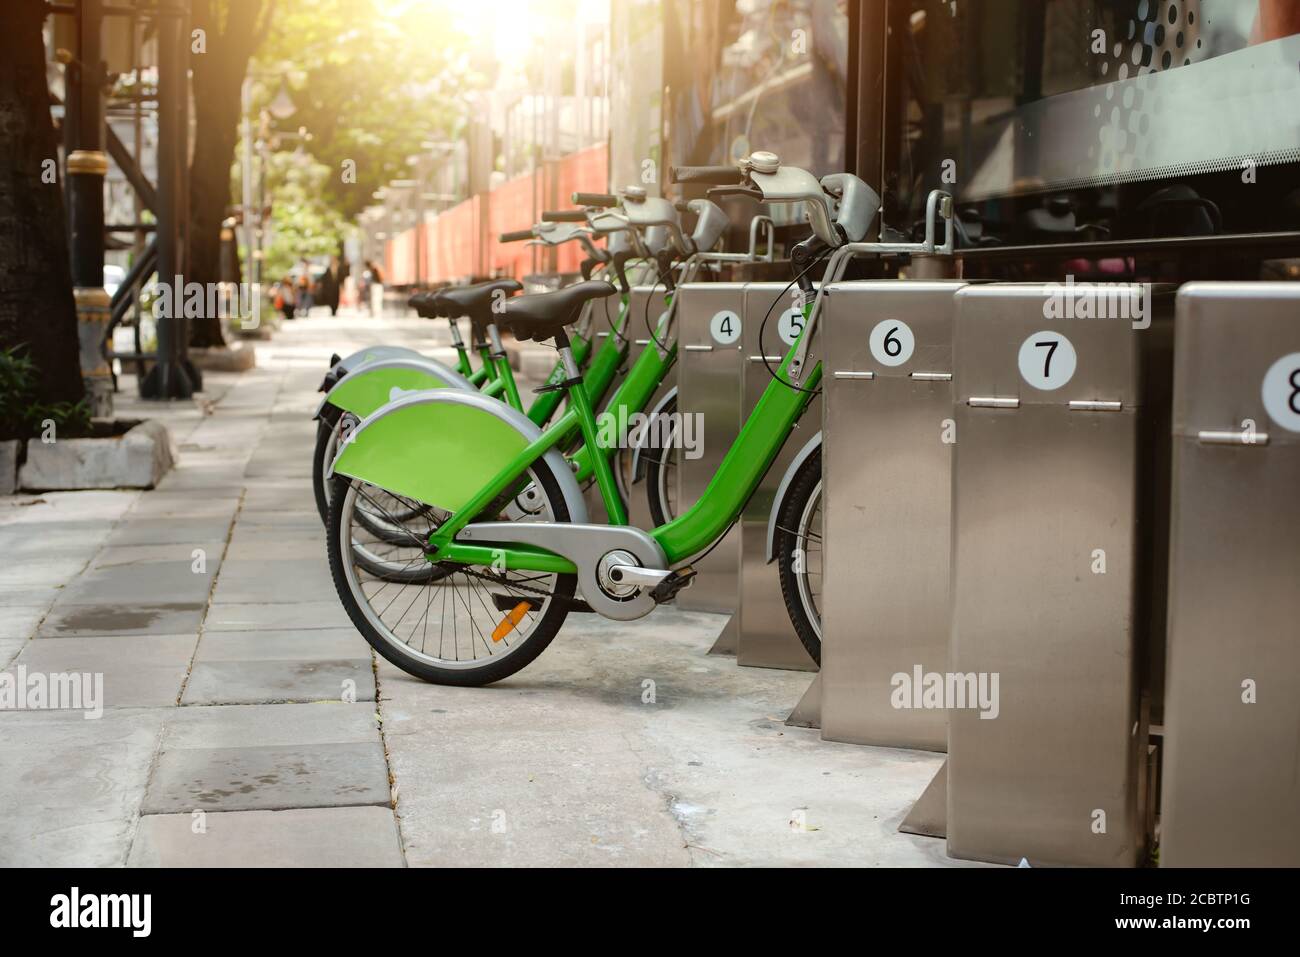 Bicicletta verde in affitto in città / bici in affitto. Foto Stock